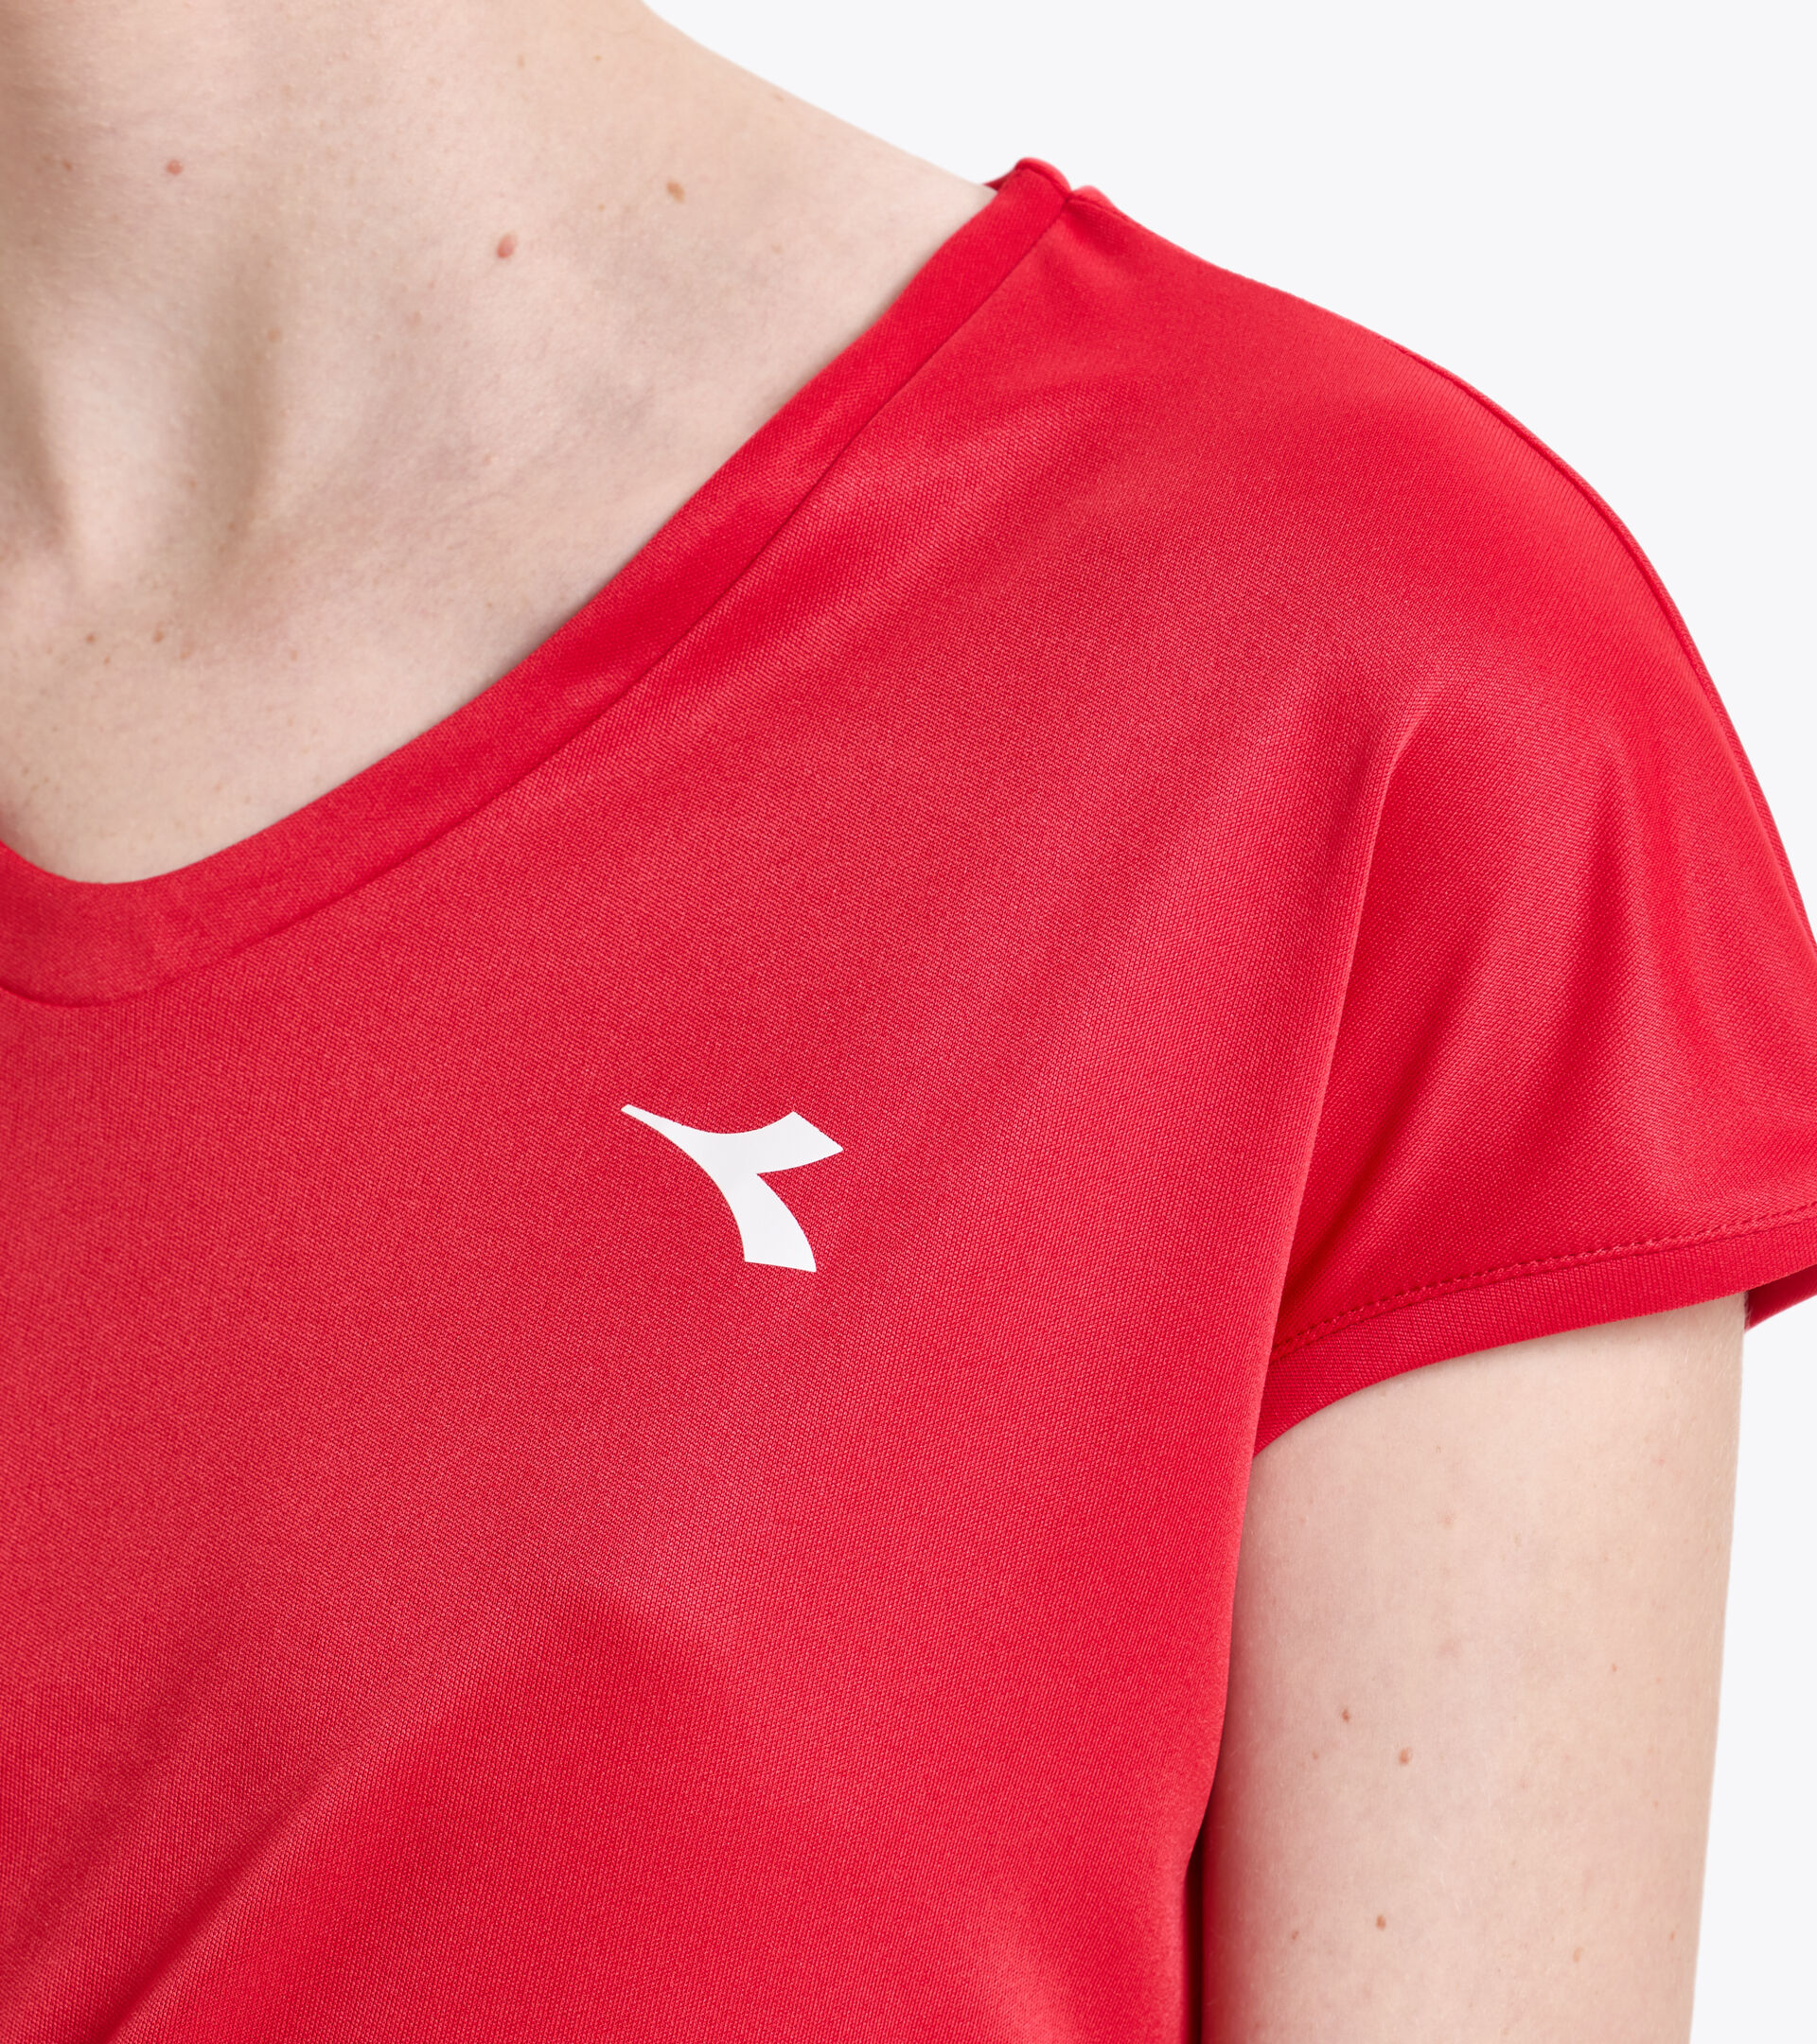 Tennis T-shirt - Women L. T-SHIRT TEAM TOMATO RED - Diadora